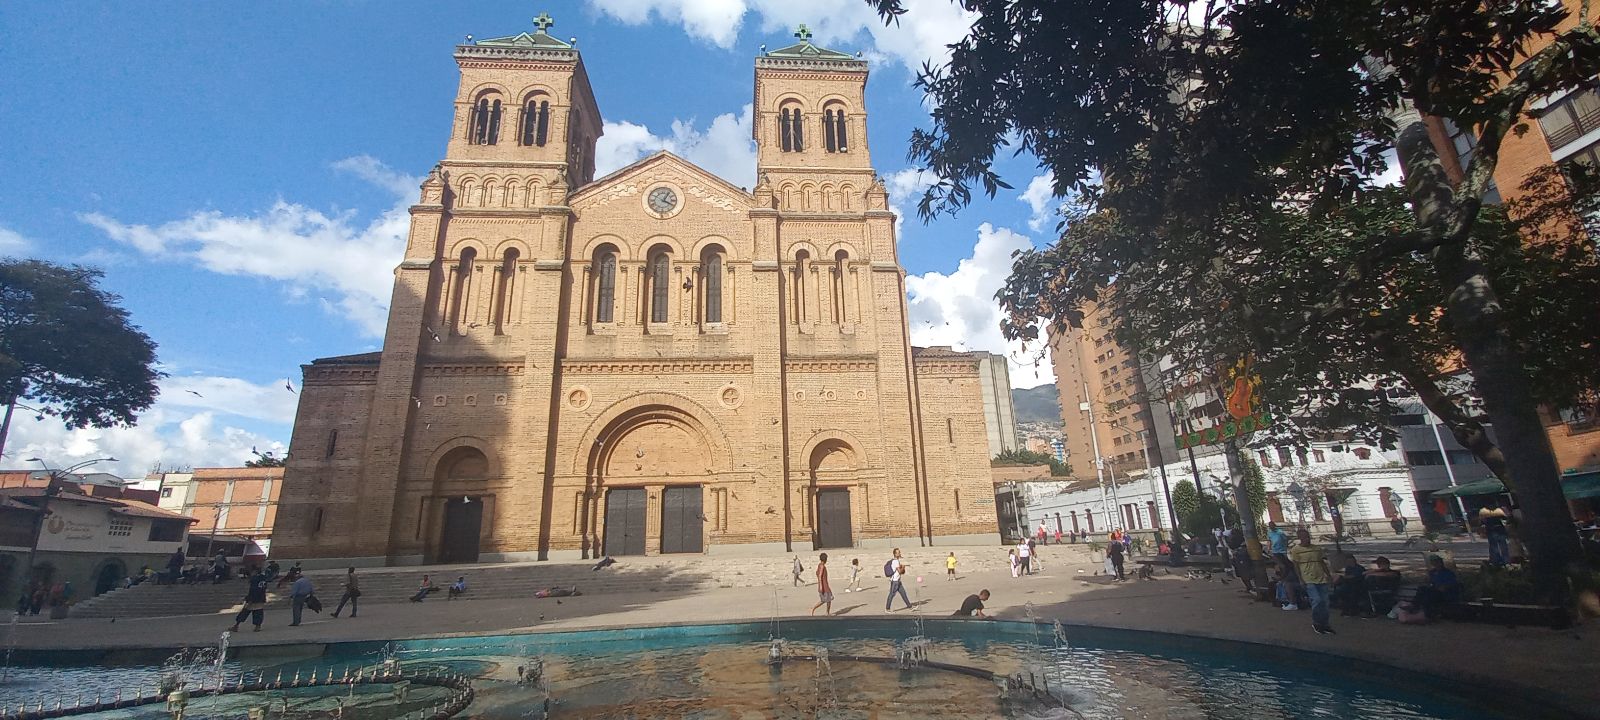 Catedral Metropolitana de Medellín, Antioquia